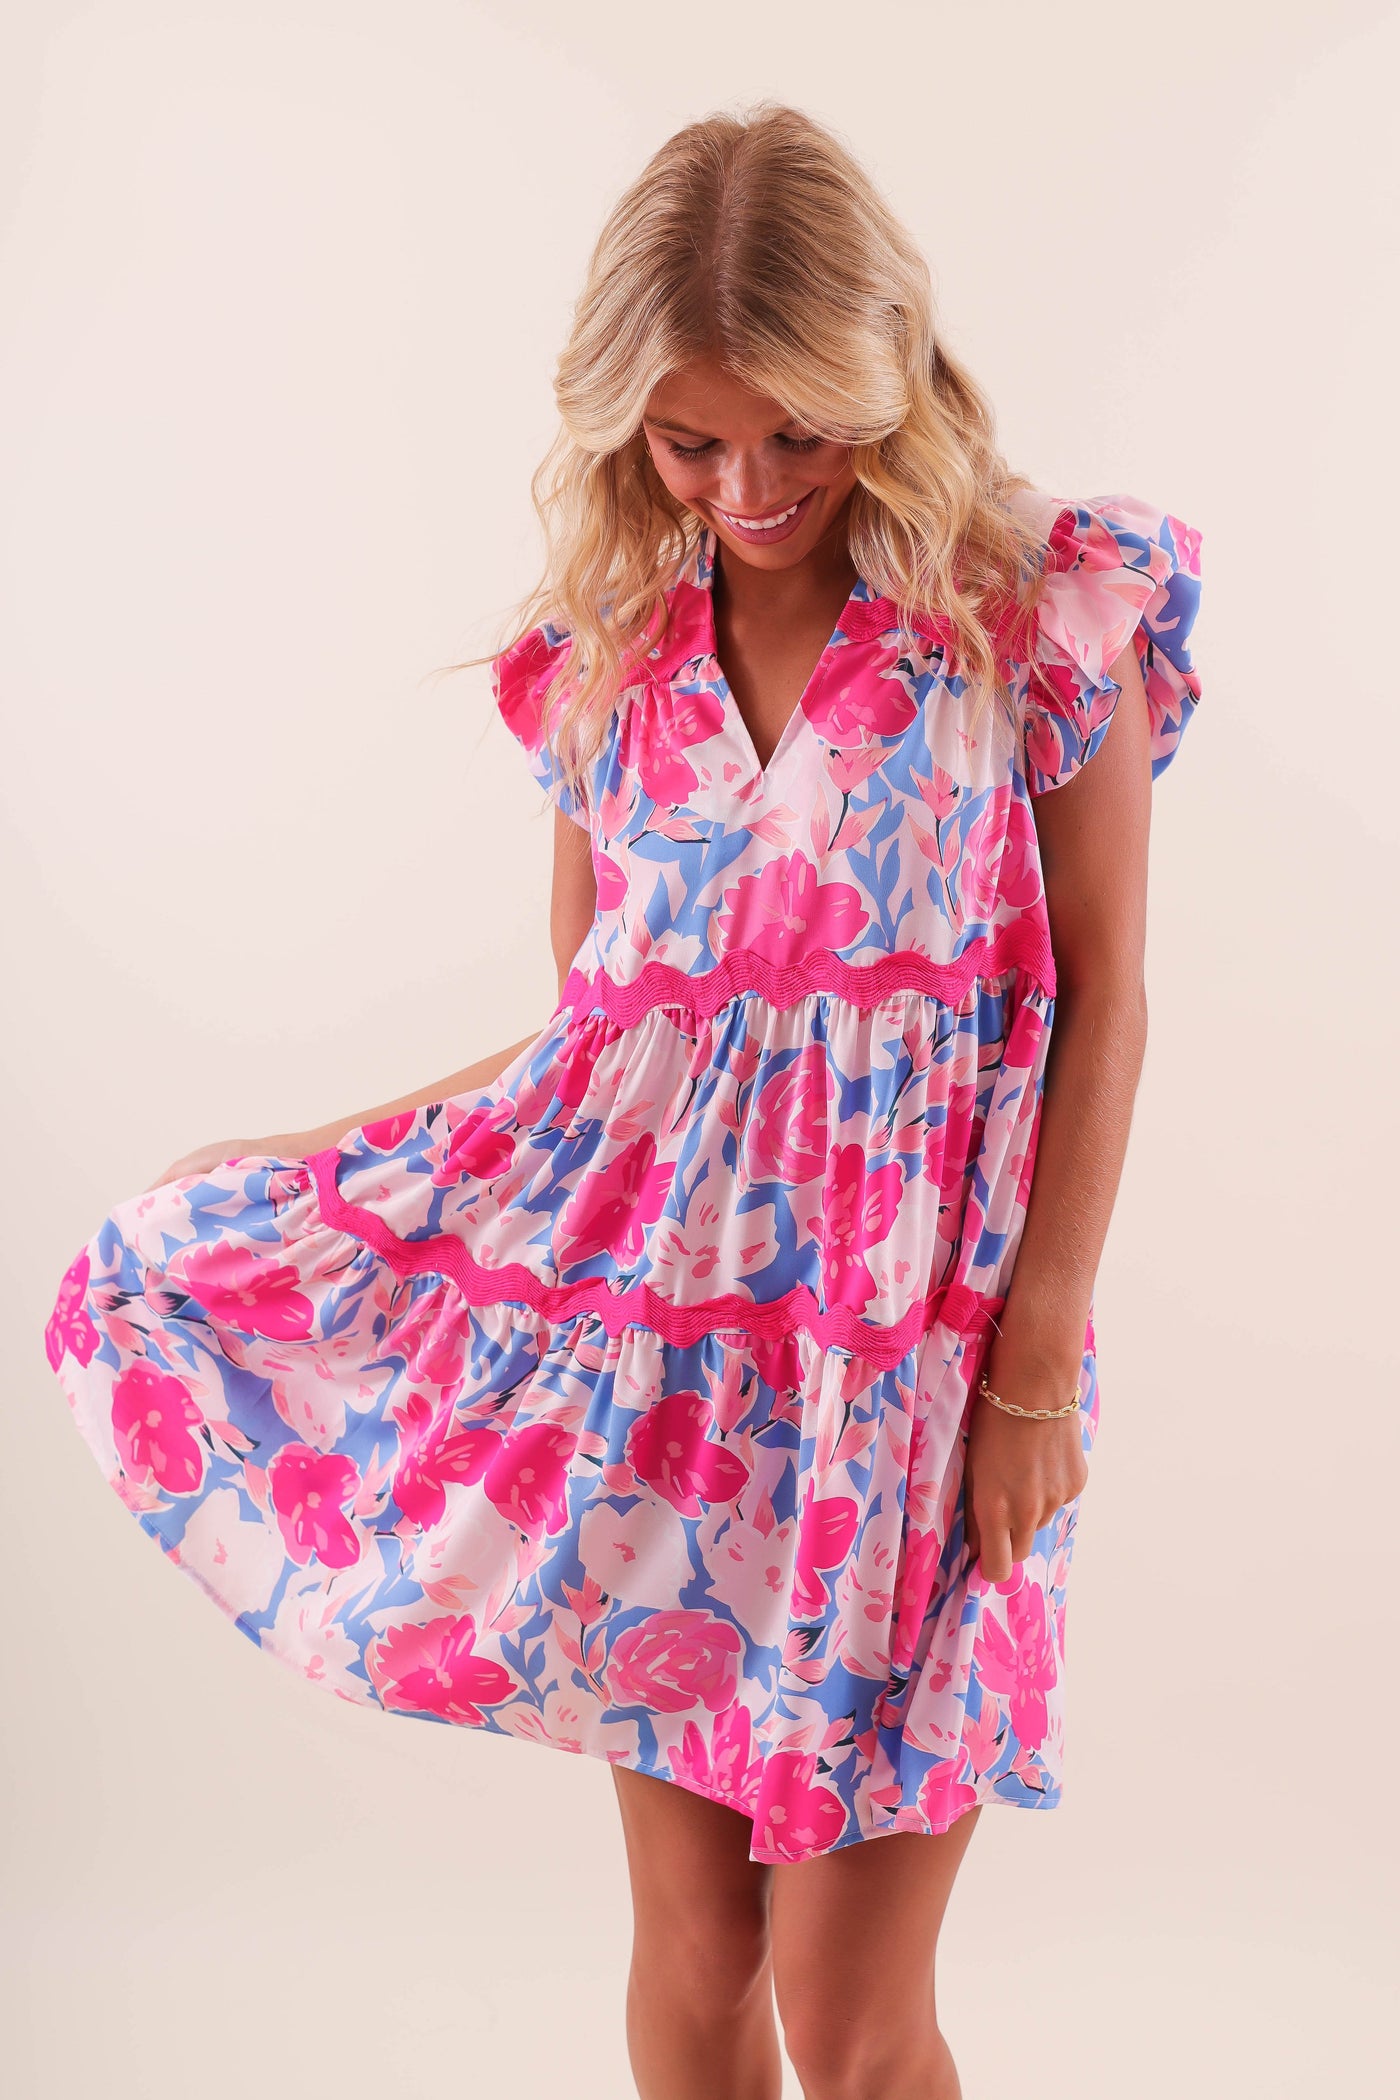 Women's Colorful Ric-Rac Dress- Women's Floral Print Mini Dress- Umgee Pink Dress